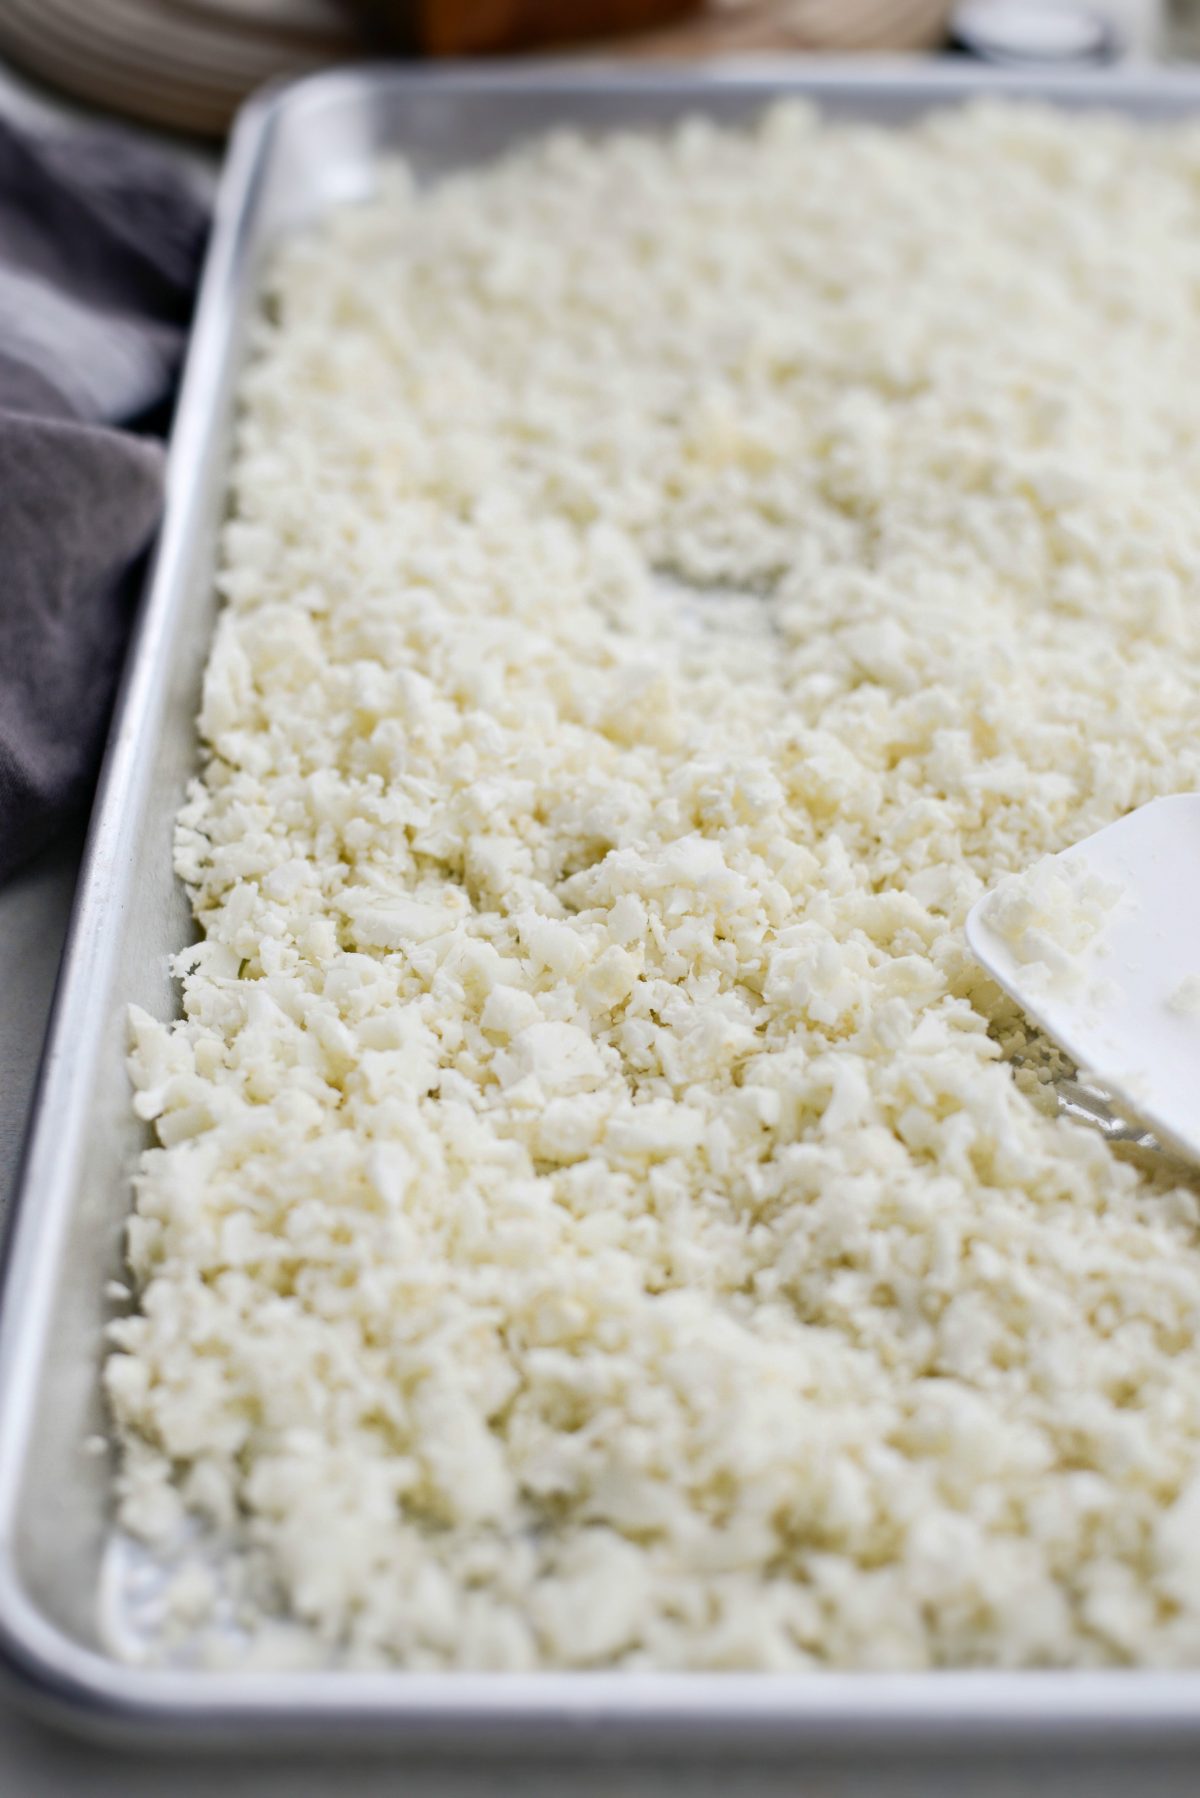 spread cauliflower rice evenly